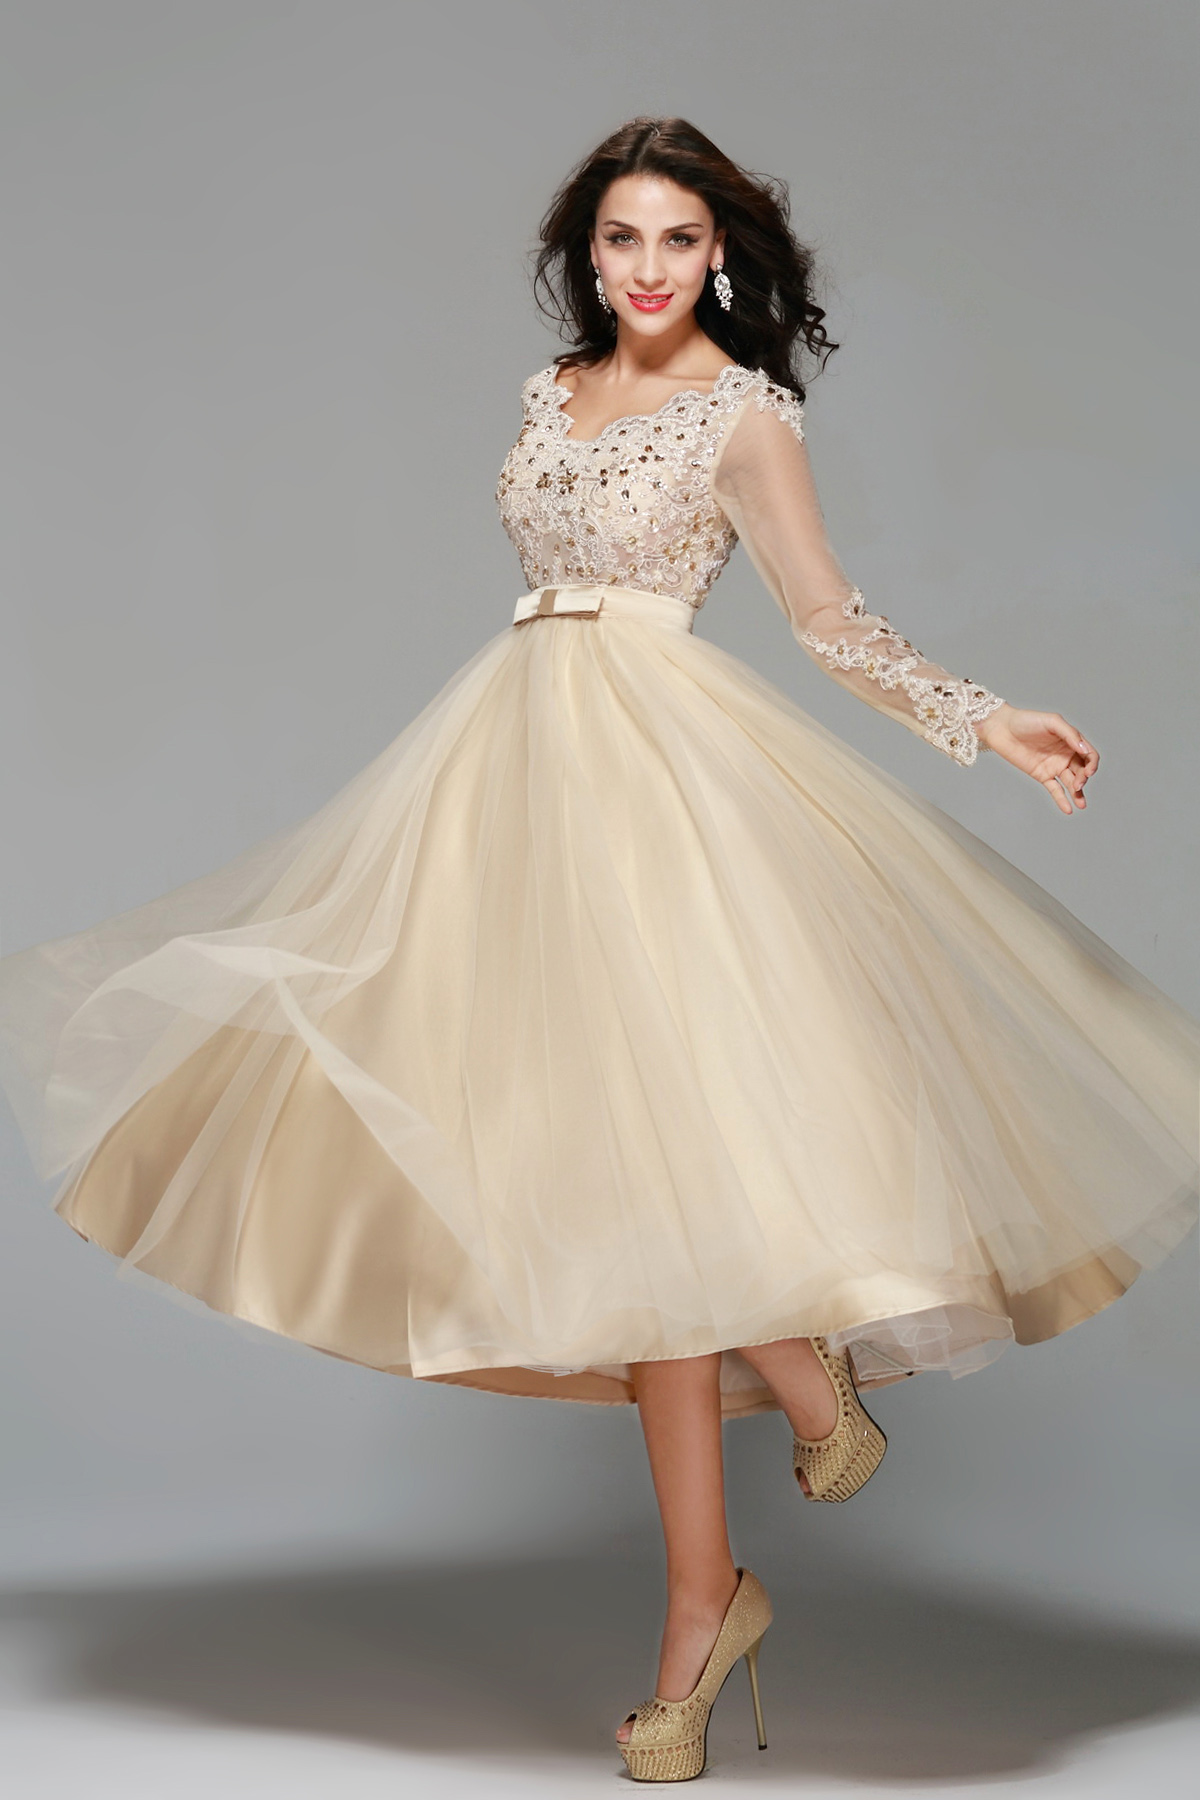 A-line Scalloped-Edge Tea-length Tulle Prom Dress